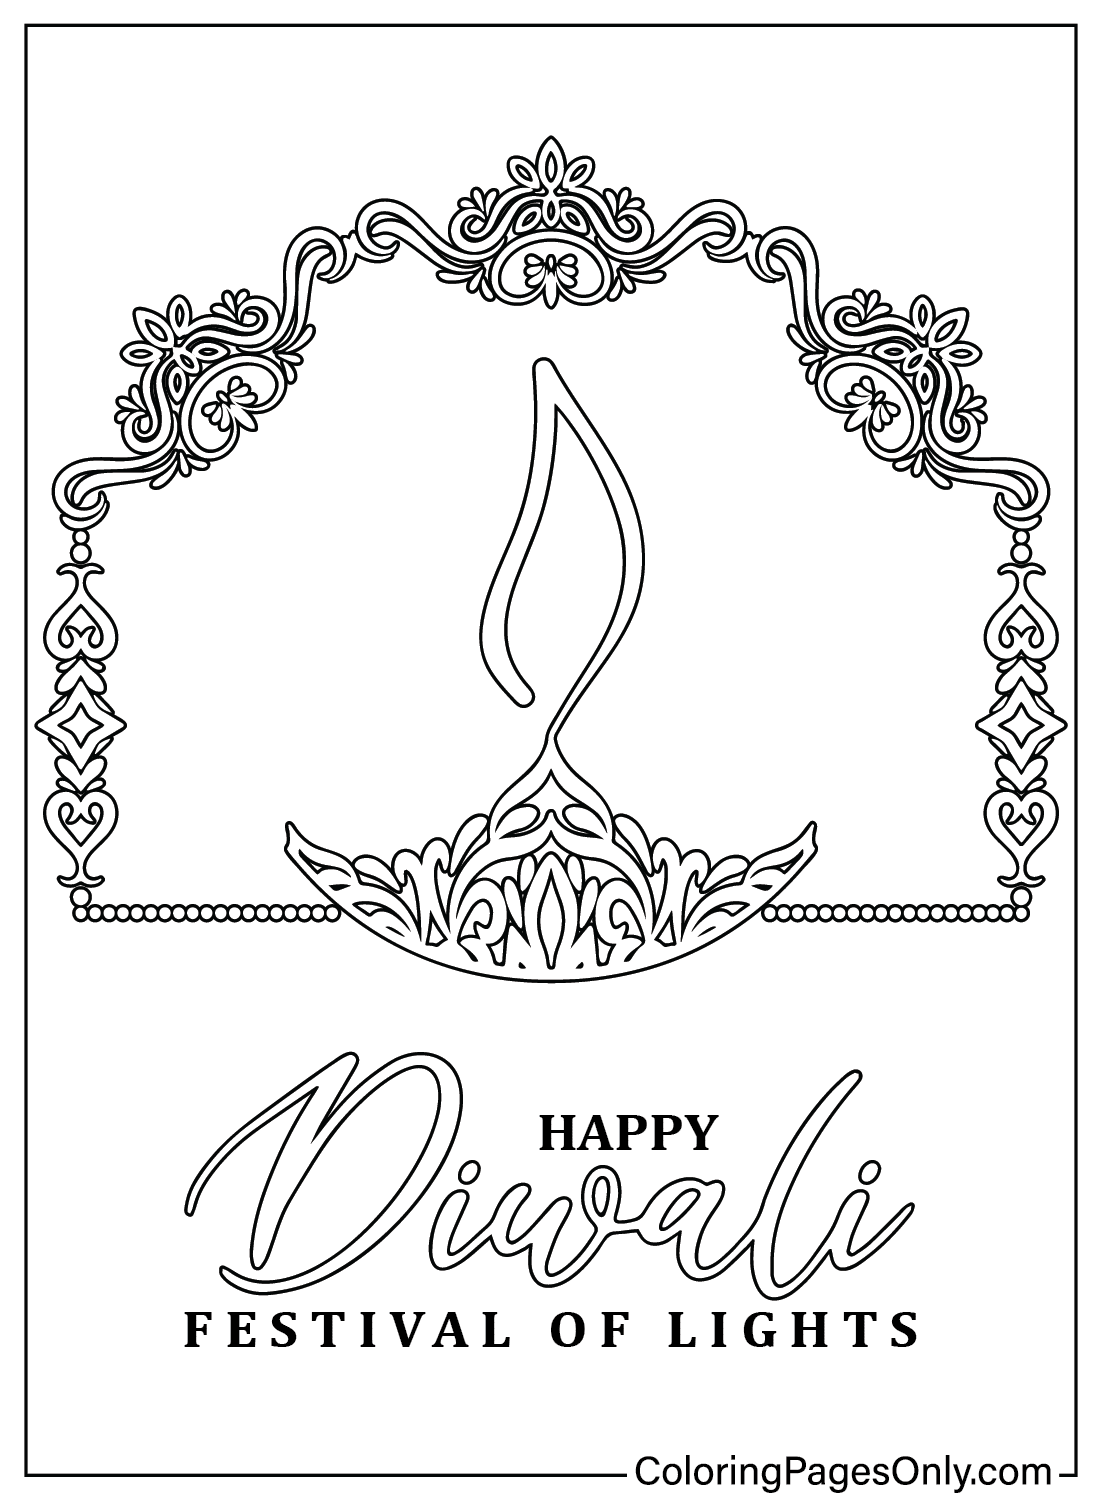 Diwali-kleurplaat van Diwali